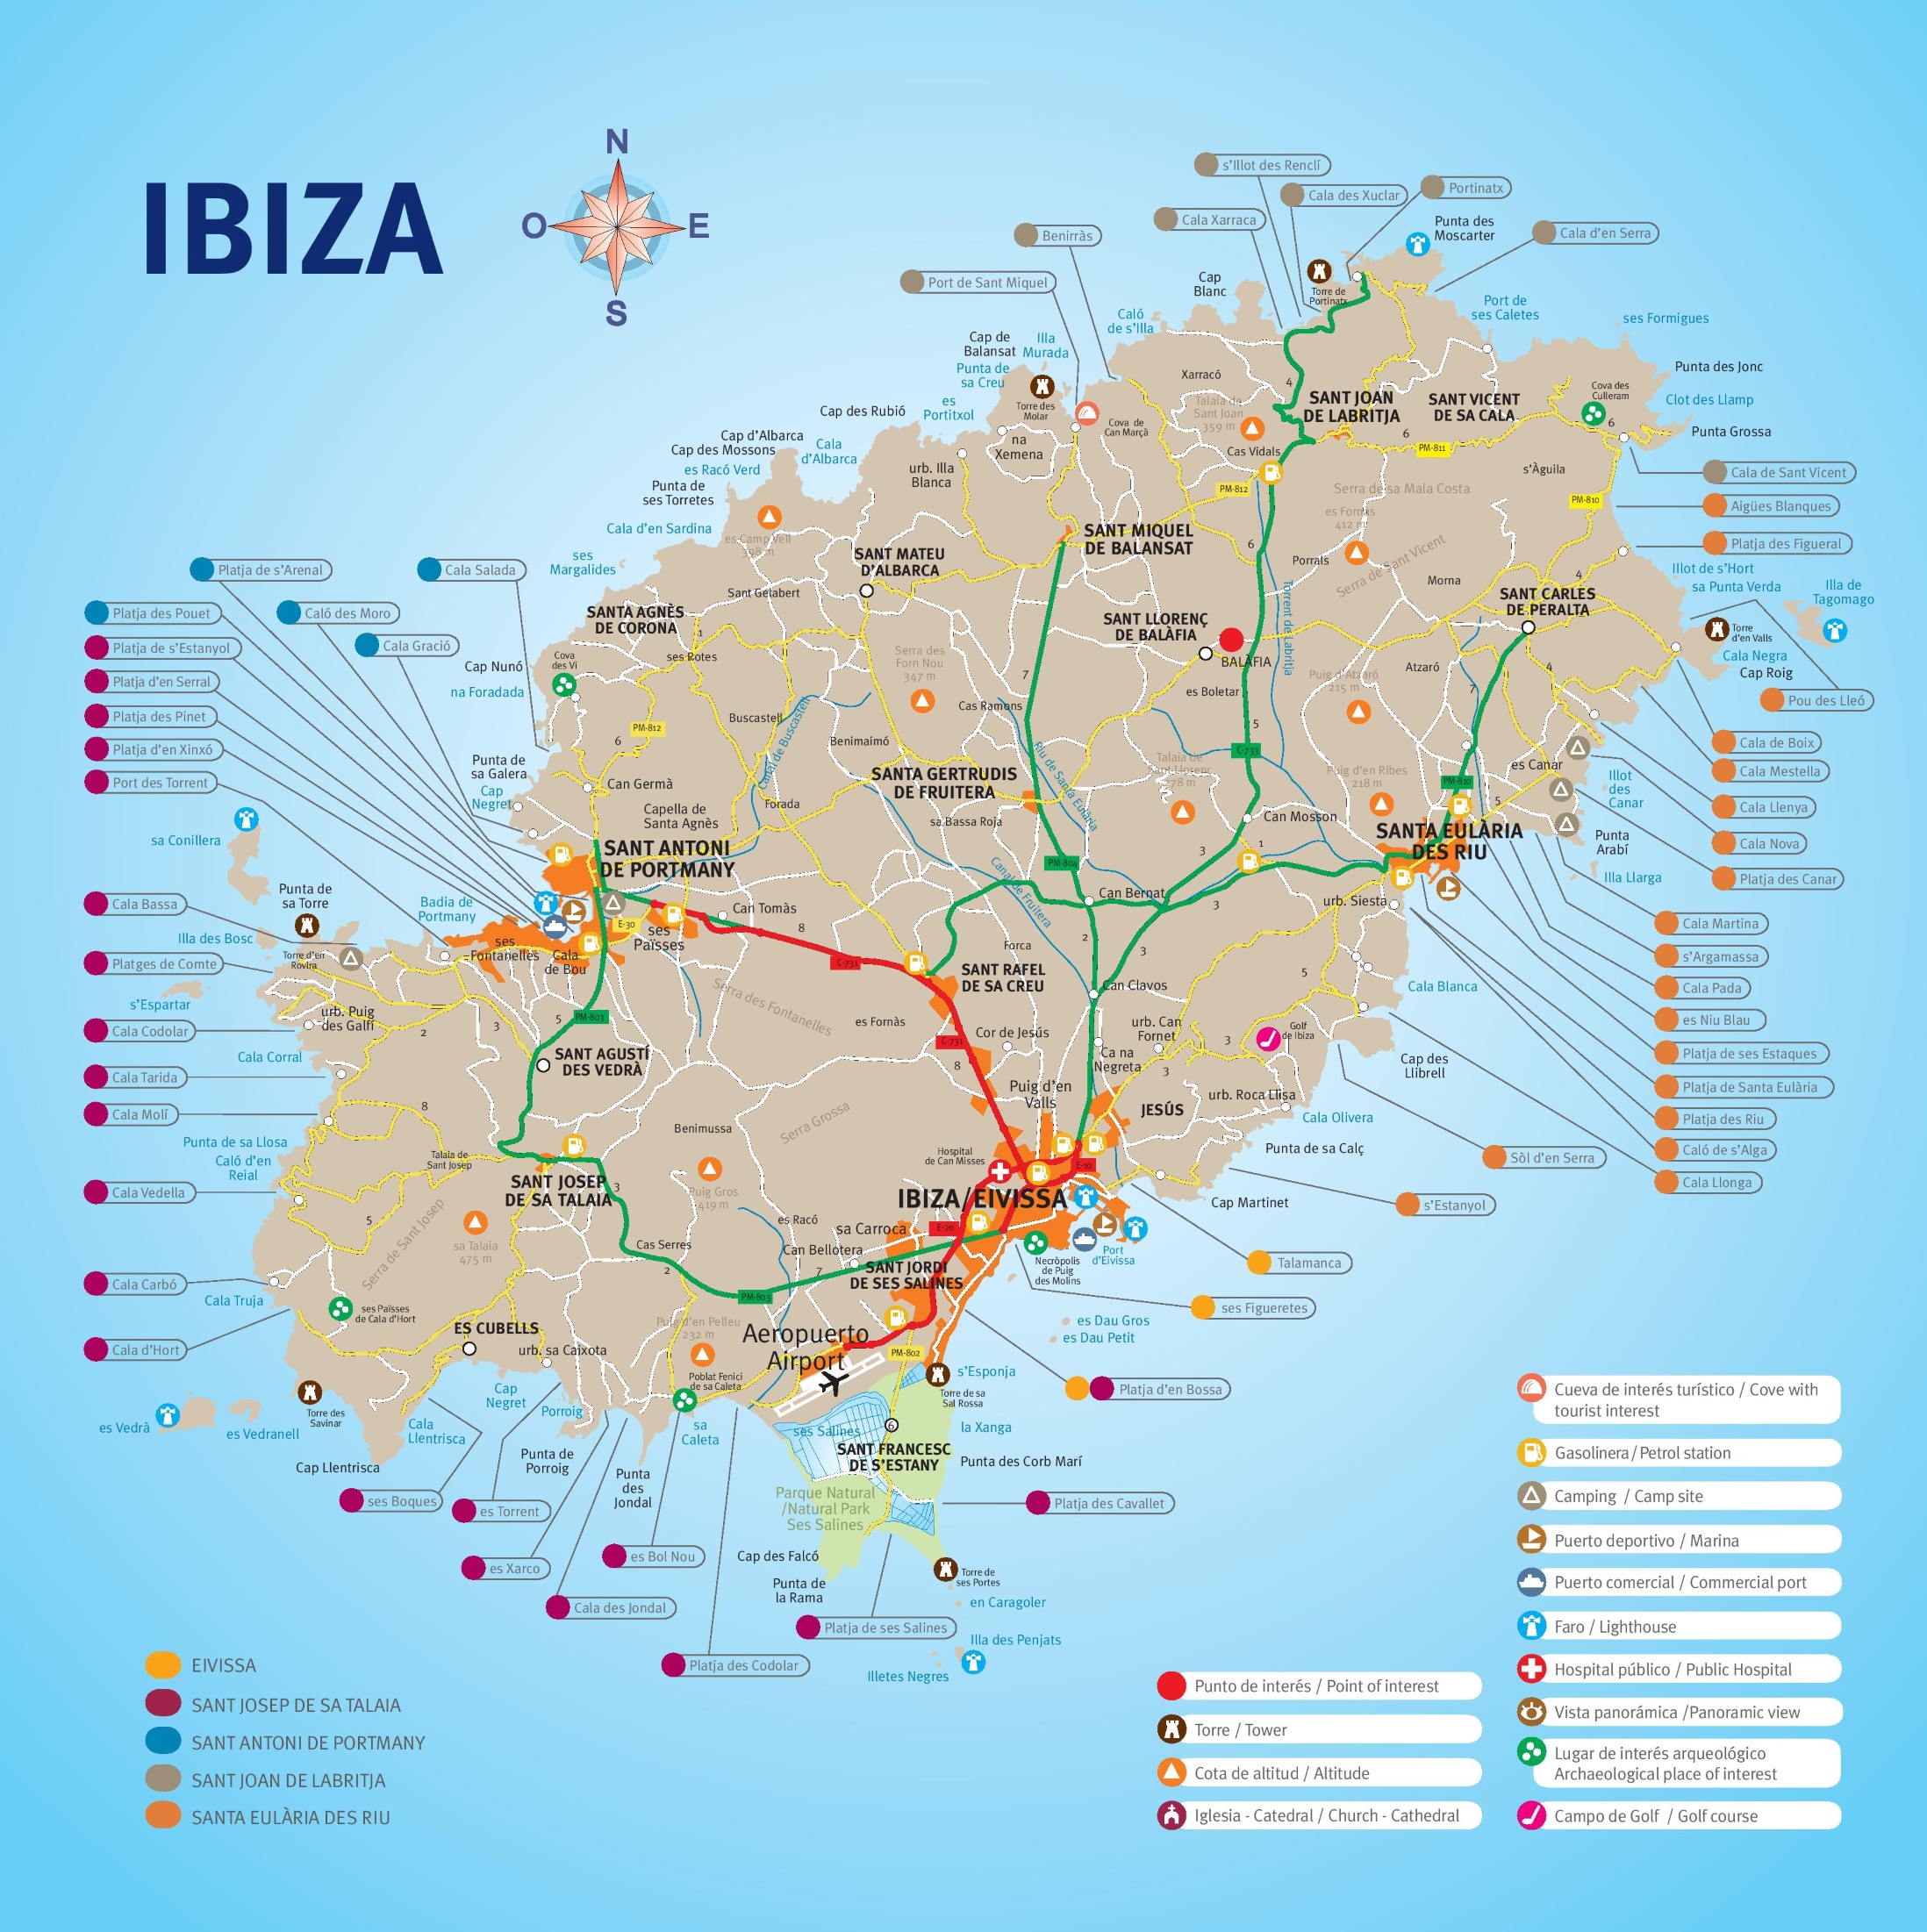 31 Map Of Ibiza Spain - Maps Database Source